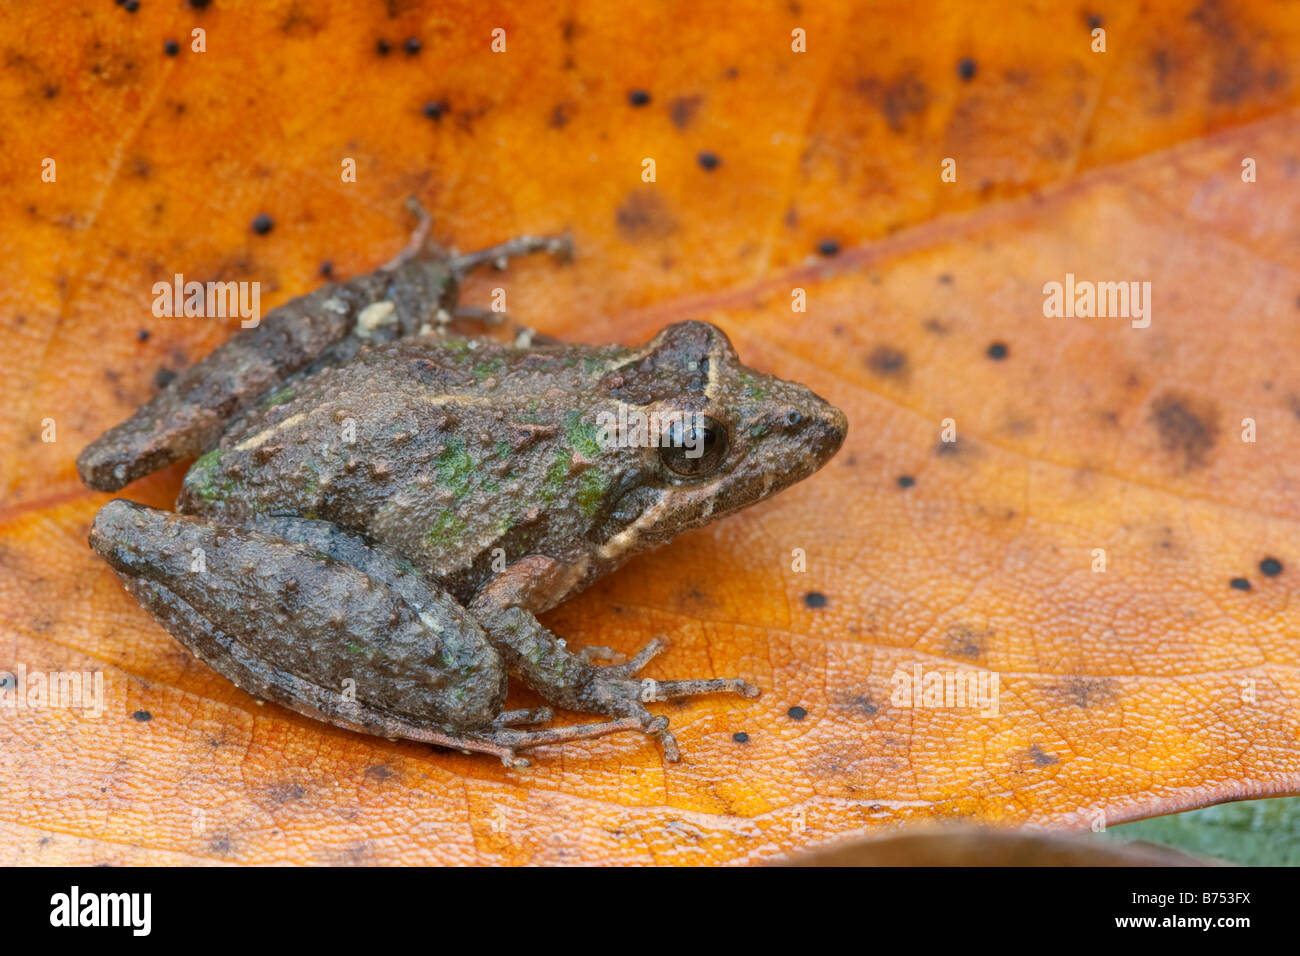 Acris gryllus dorsalis, Florida Cricket Frog Stock Photo